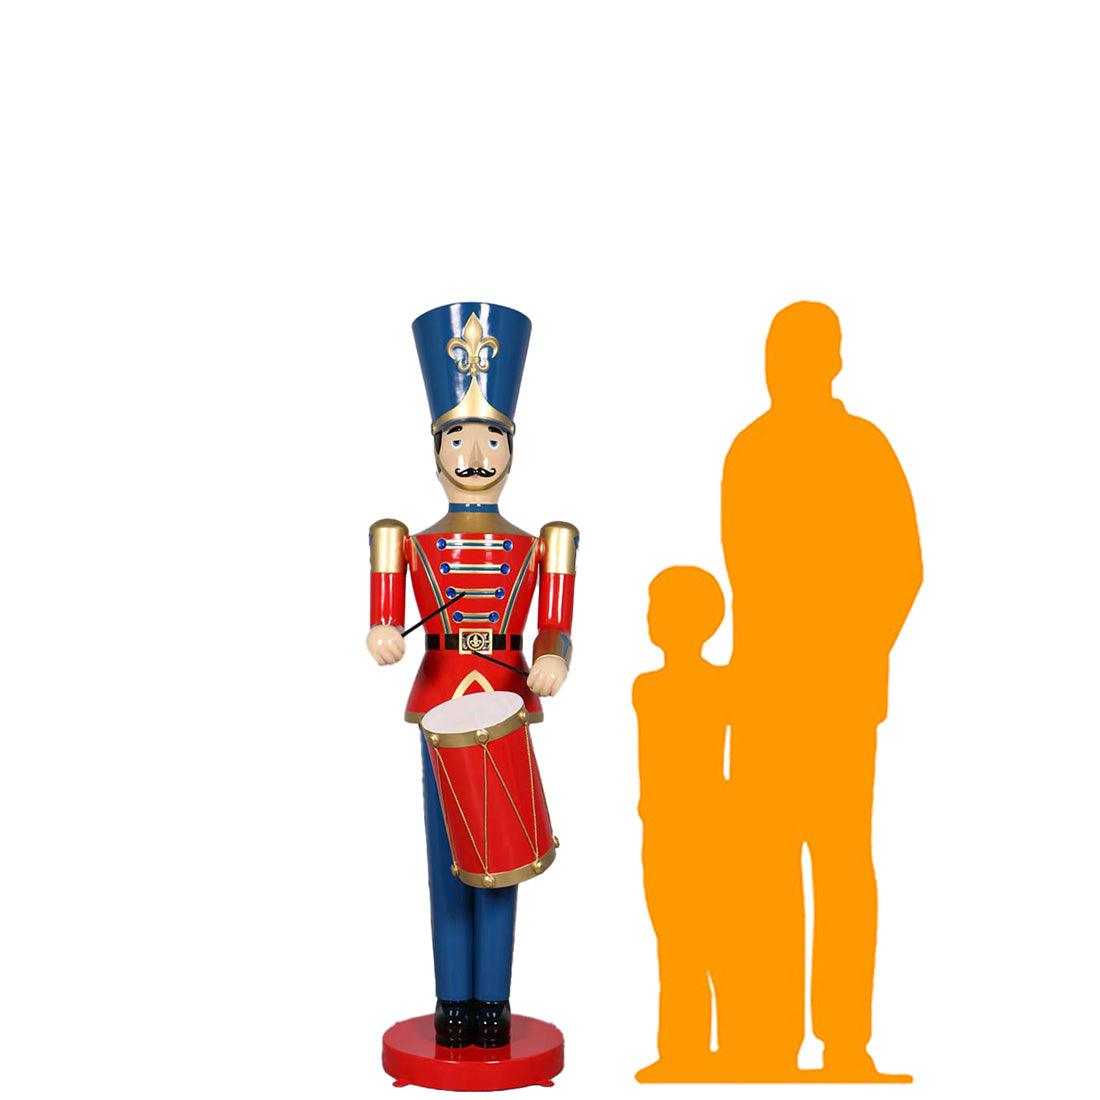 Red Toy Soldier Drummer Statue - LM Treasures Prop Rentals 